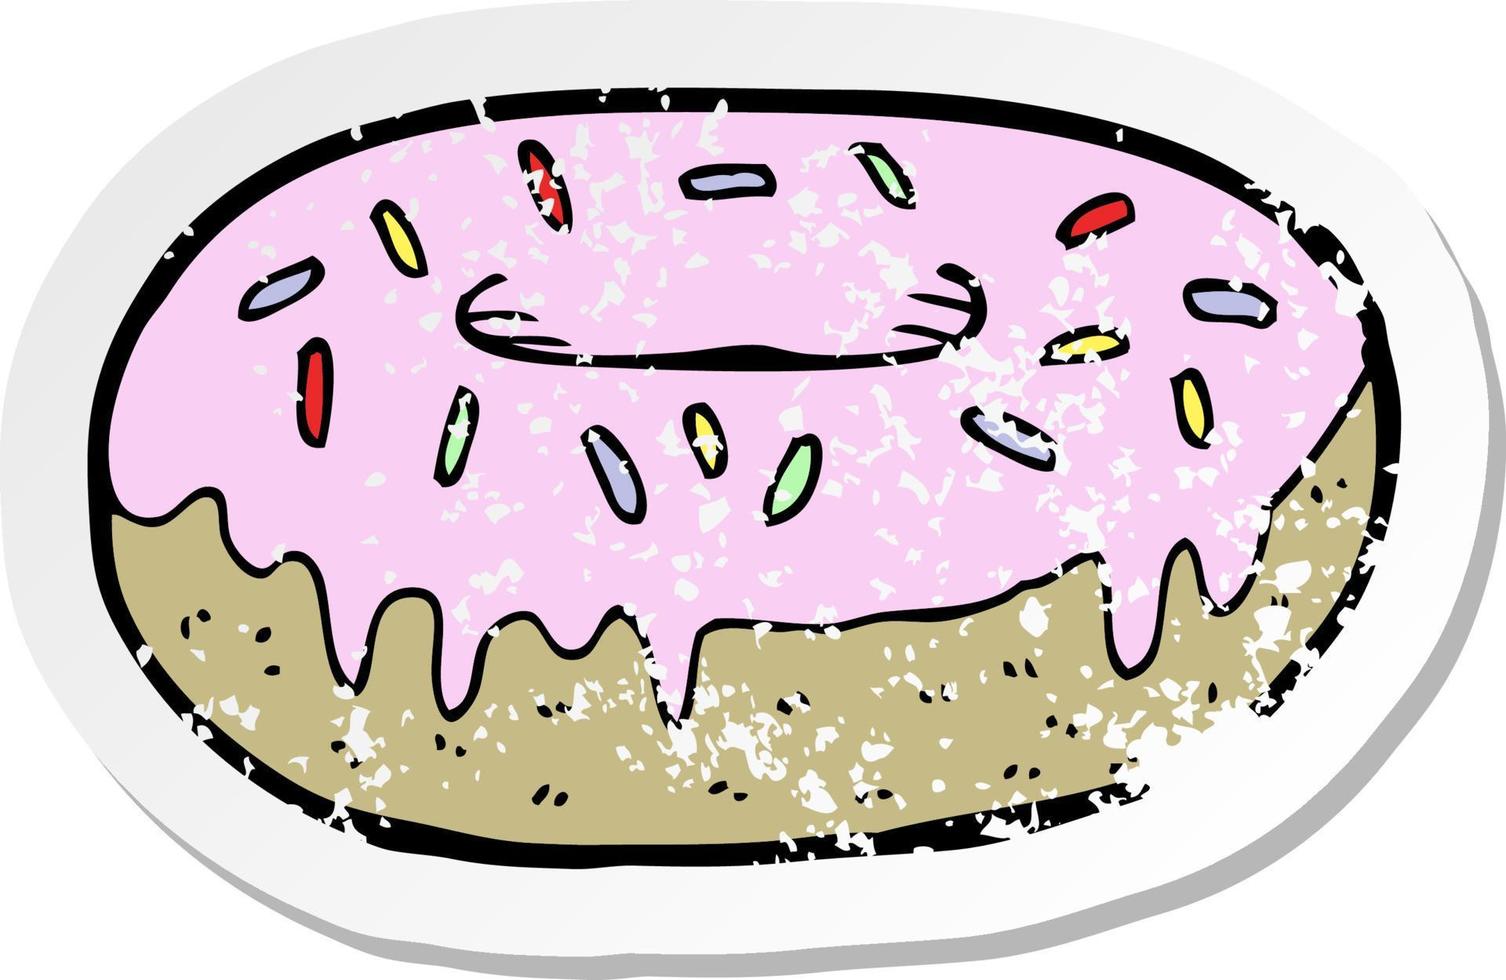 retro distressed sticker of a cartoon donut vector